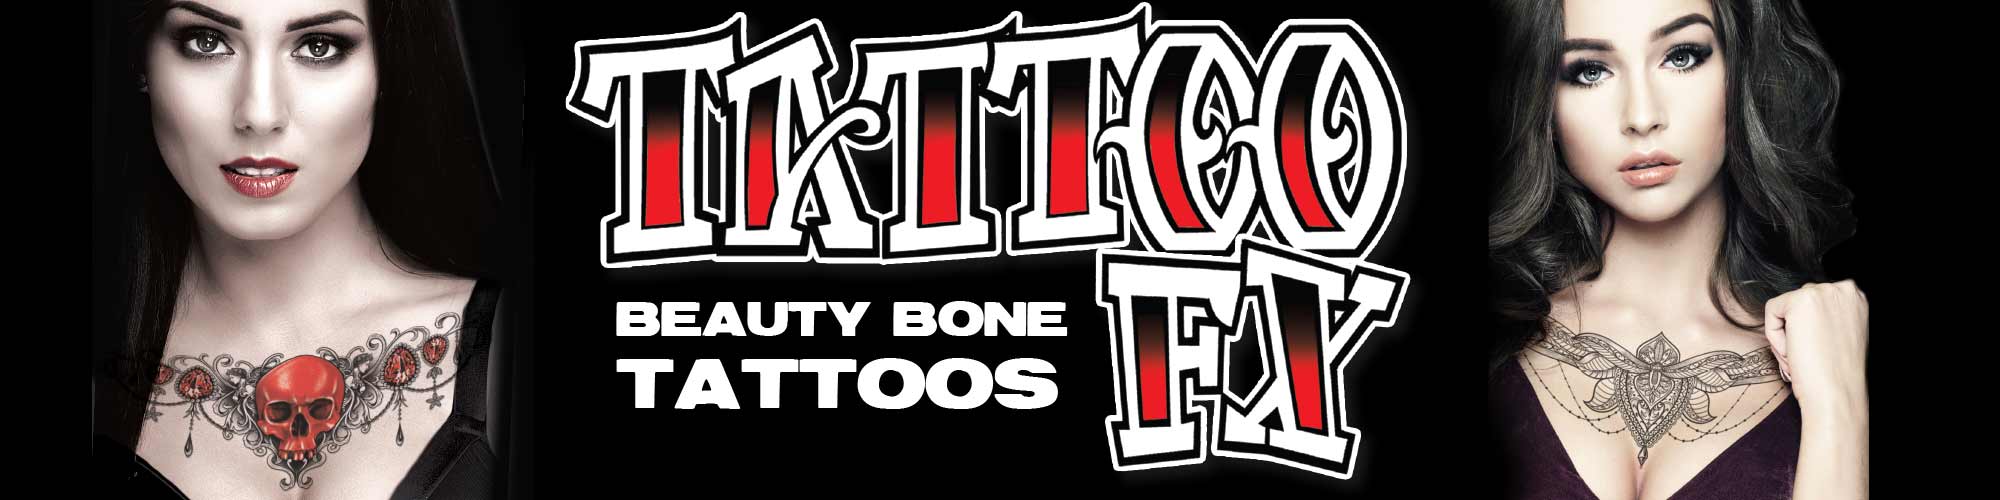 Beauty Bone Tattoos